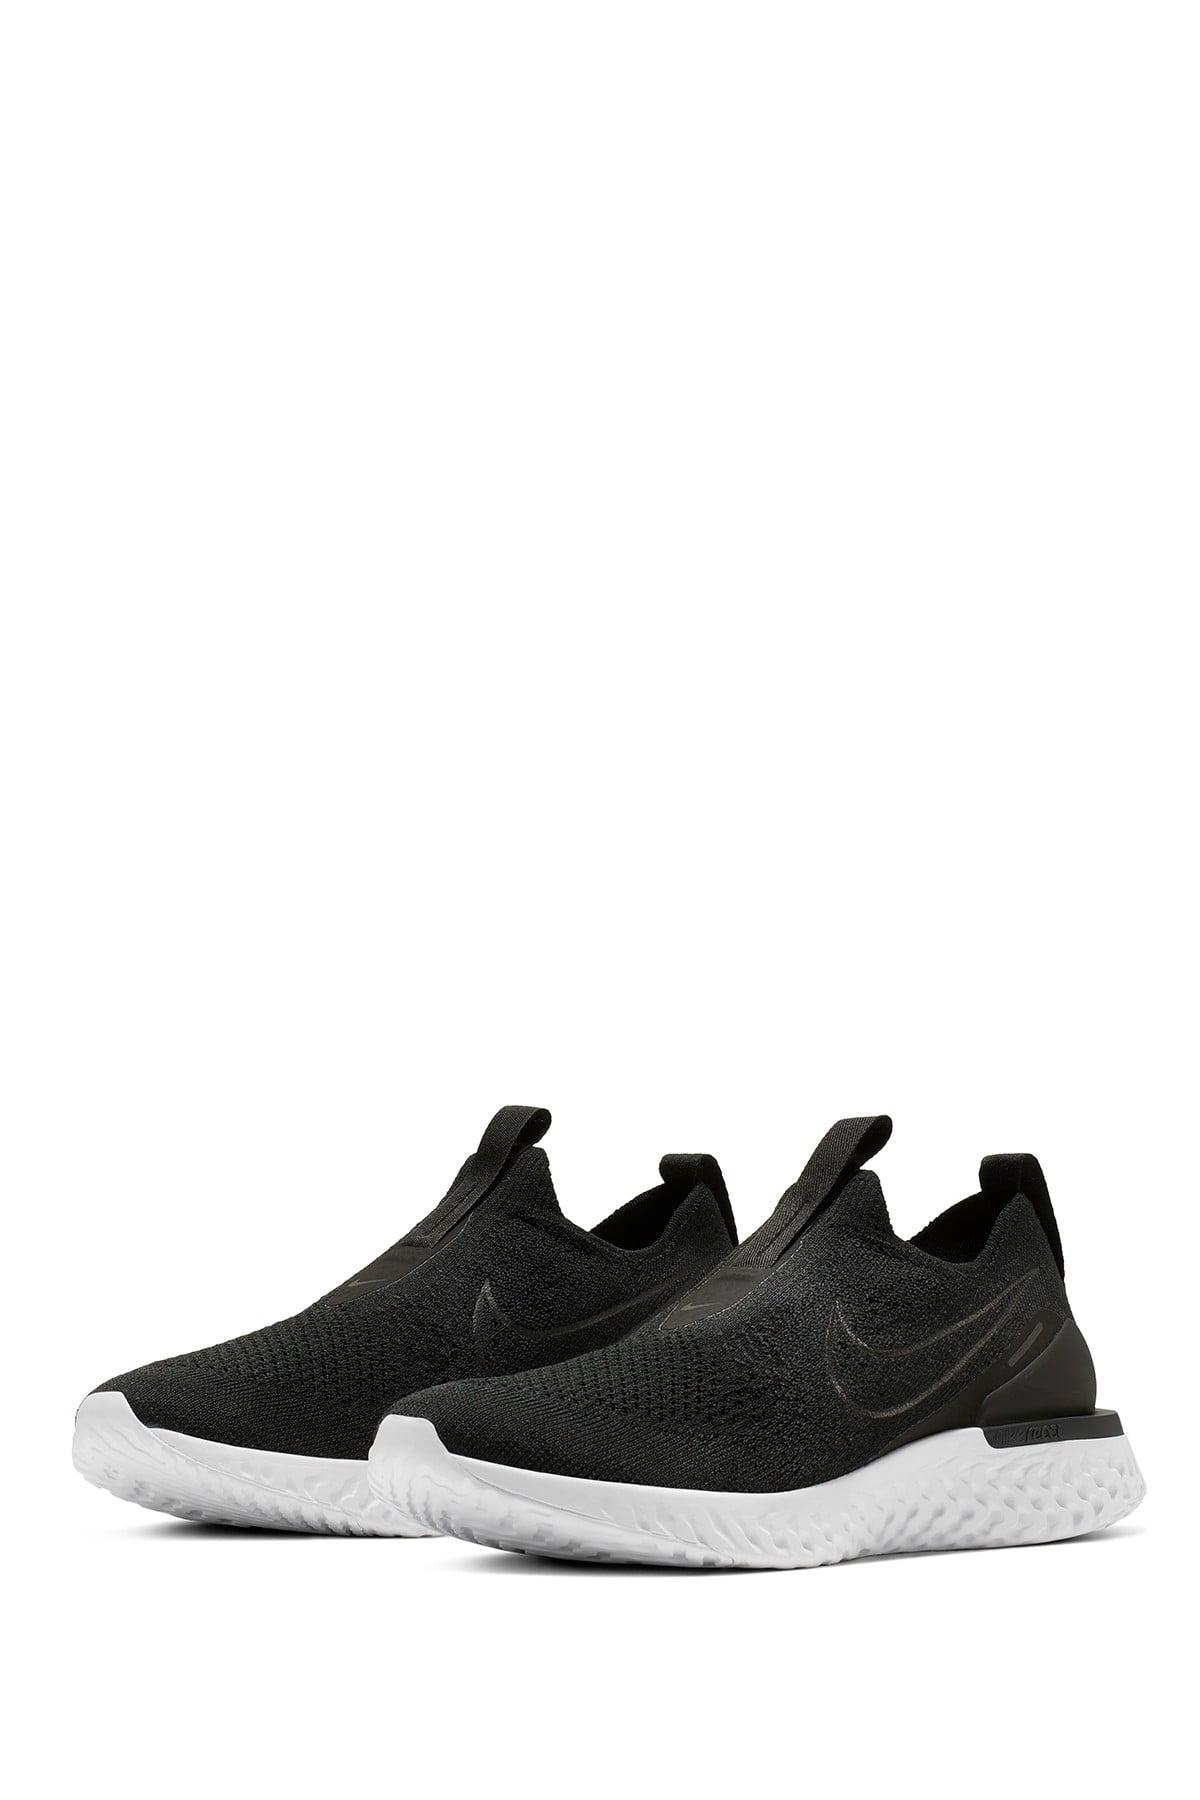 Nike Rubber Epic React Flyknit 2 Running Shoe in Black/ Black/ White (Black)  | Lyst